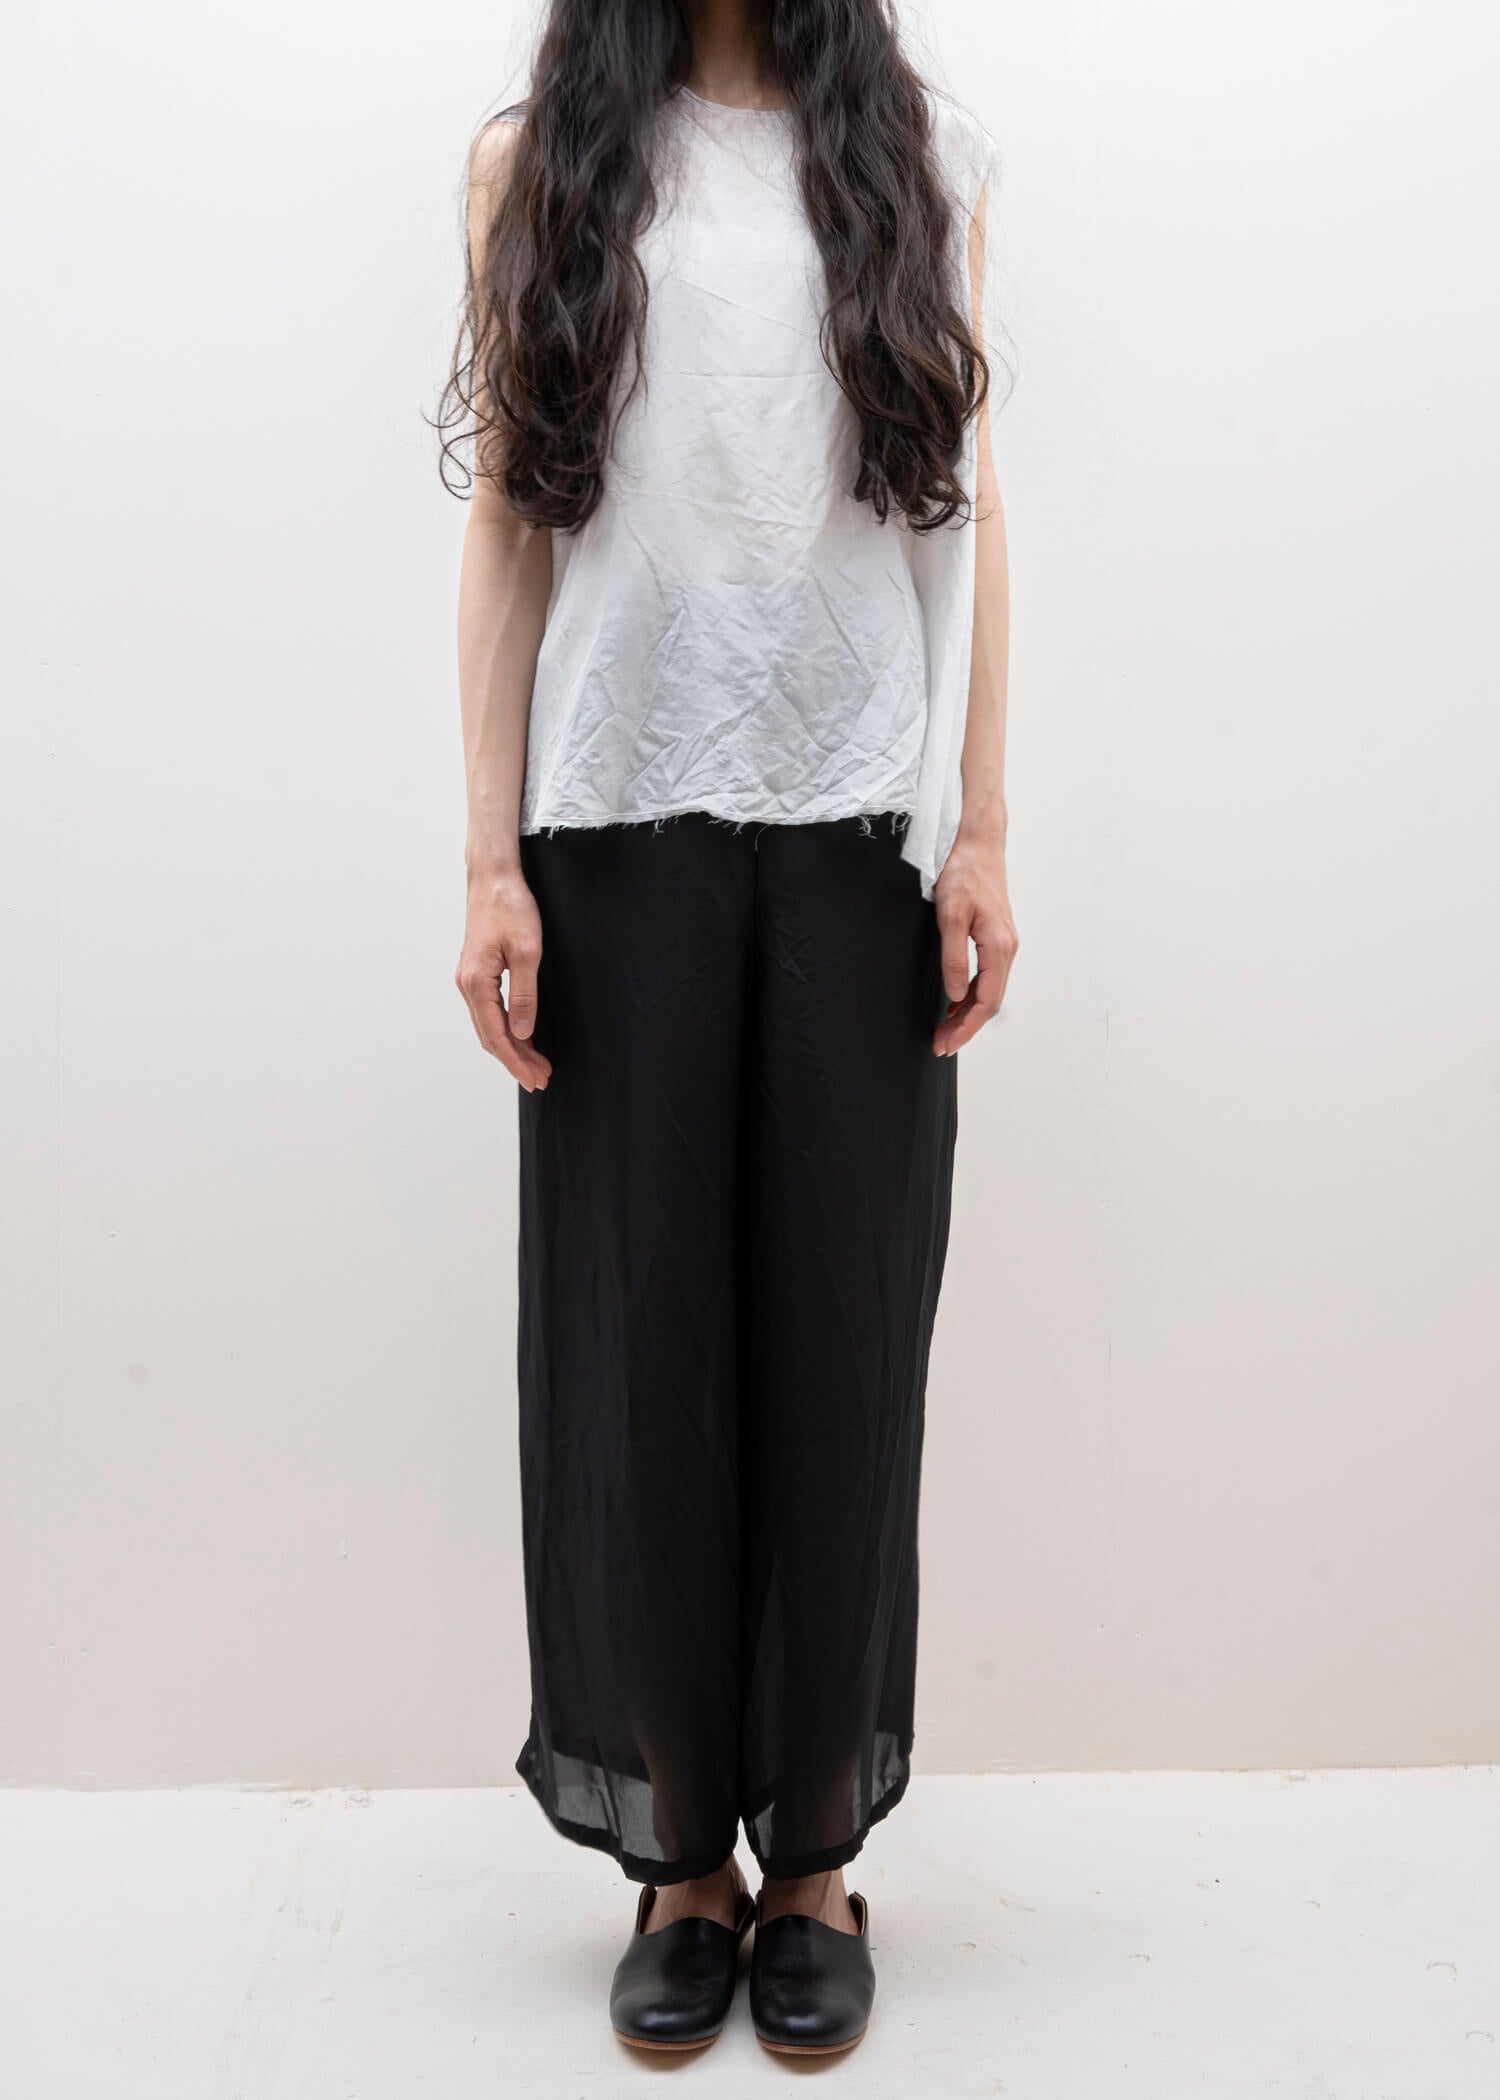 SCHA / Art#1478 / Habutai Silk Pyjama Pants / Black